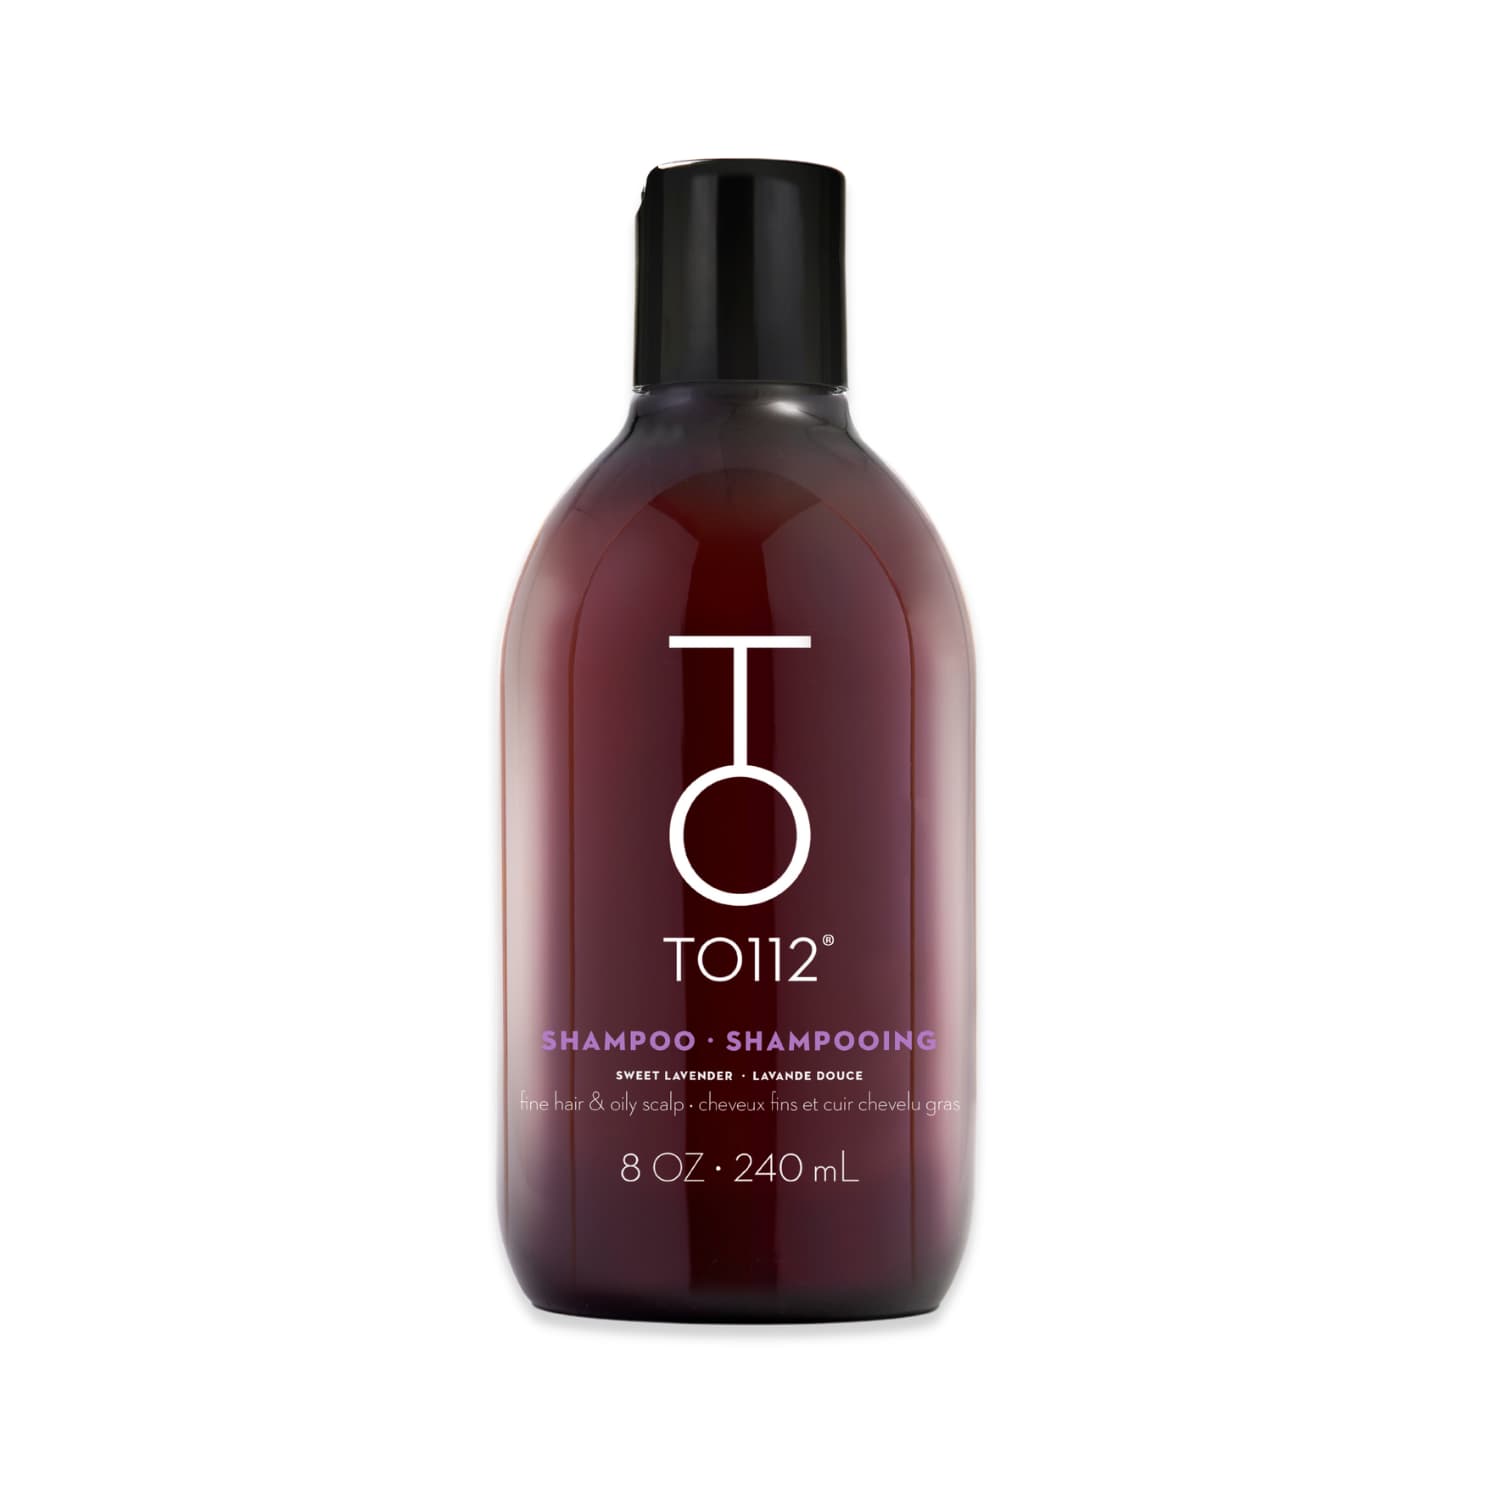 TO112 Shampoo For Fine Hair & Oily Scalps 8oz